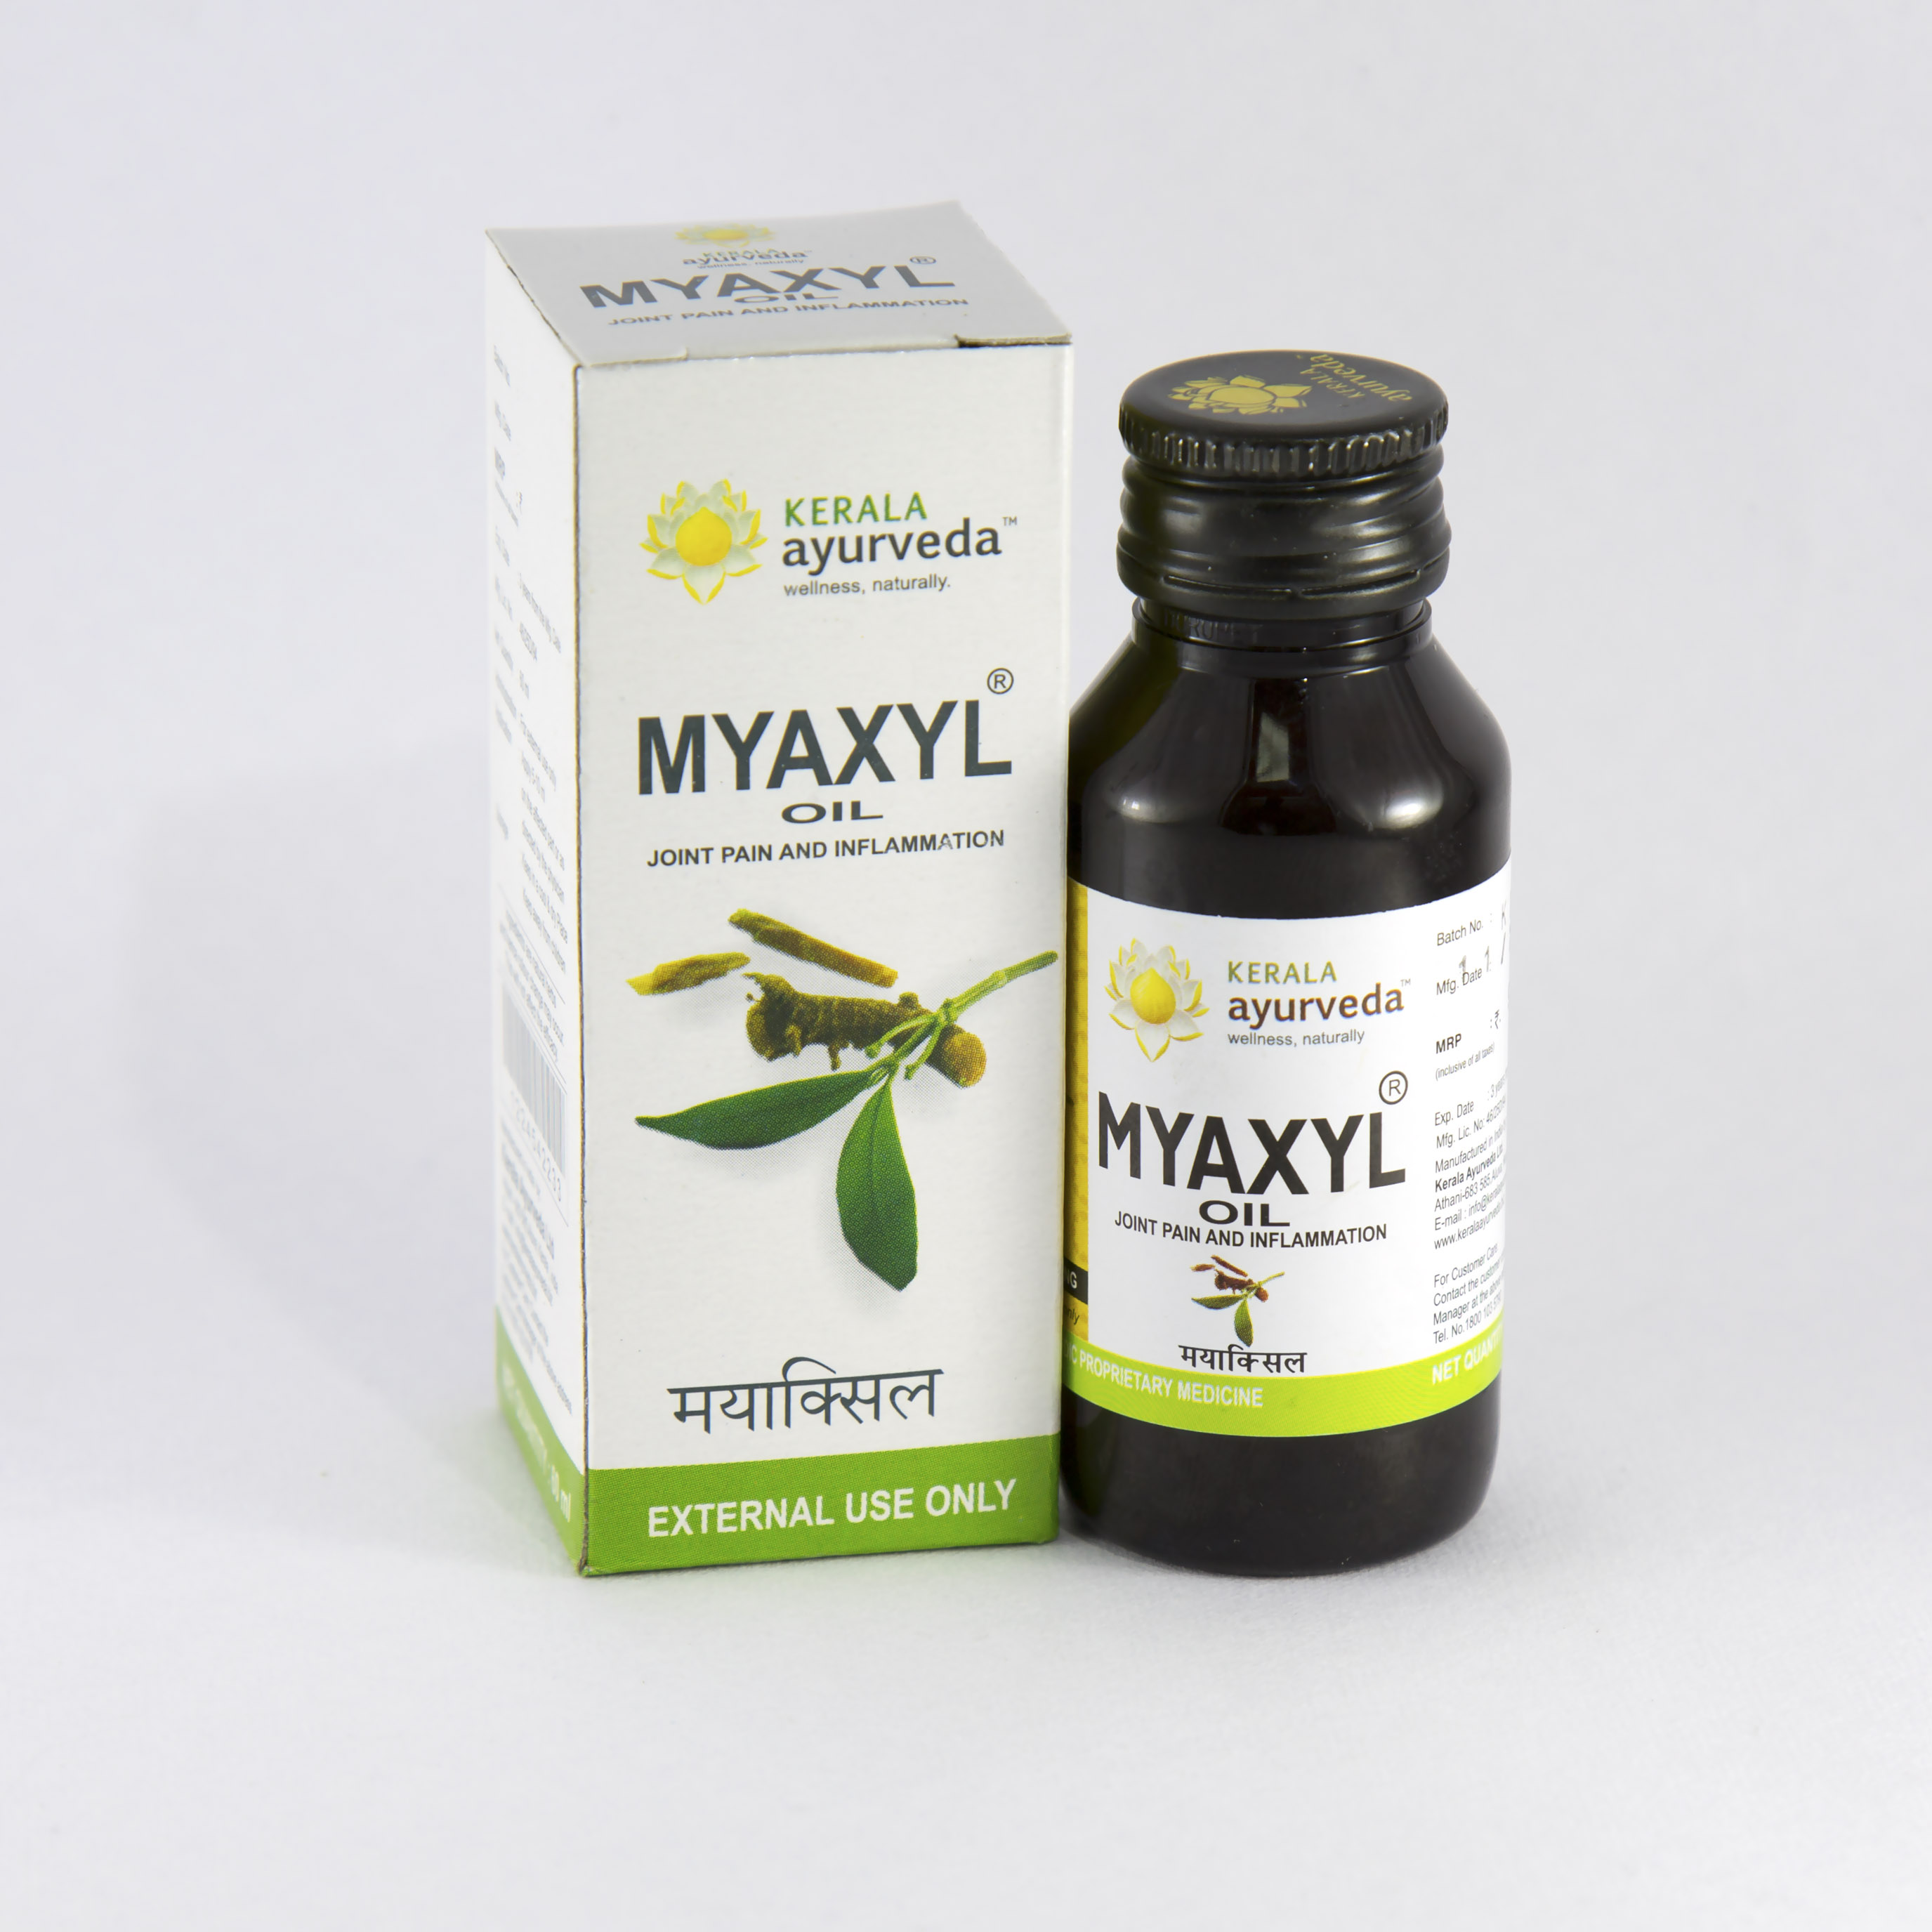 Kerala Ayurveda Myaxyl Oil